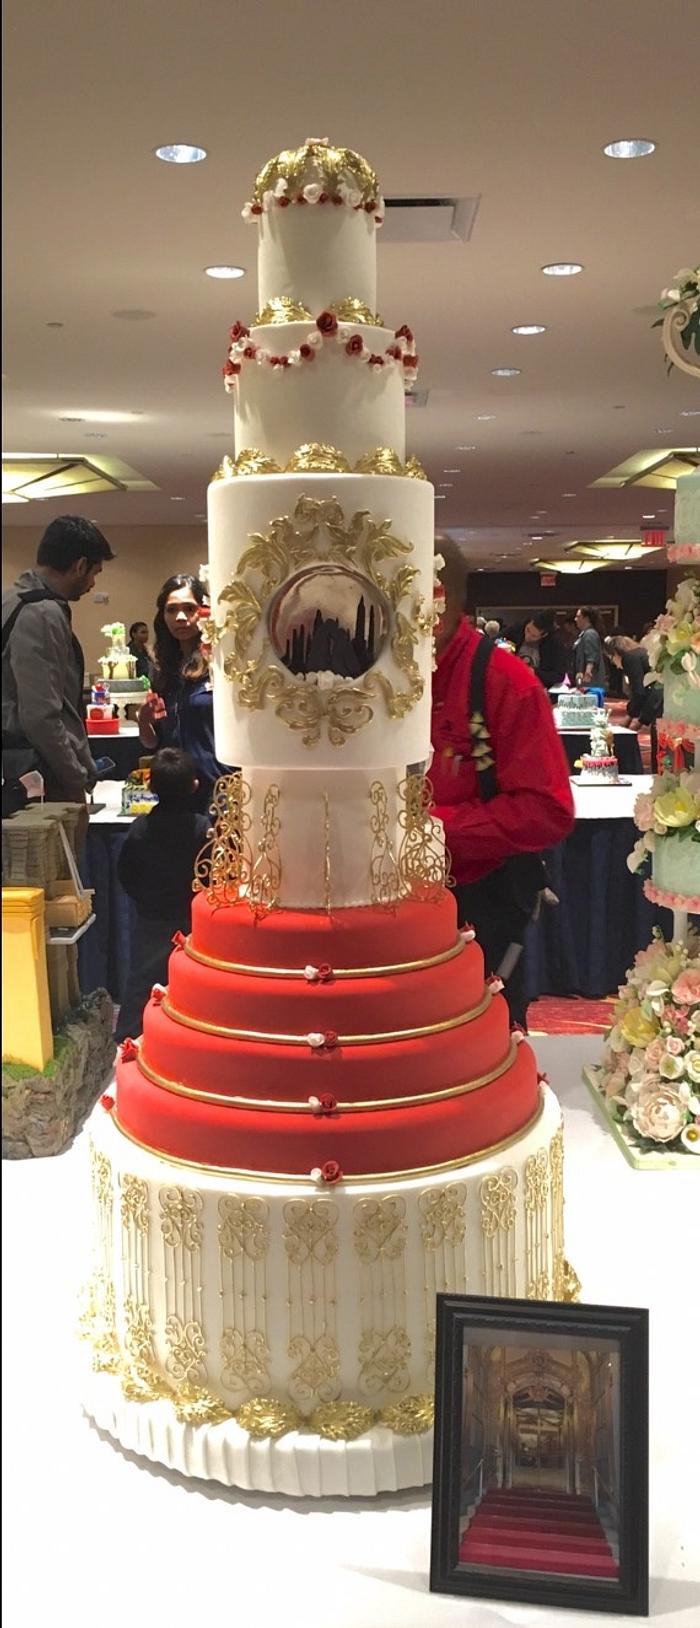 Wedding cake inspired by St Regis in Ny 